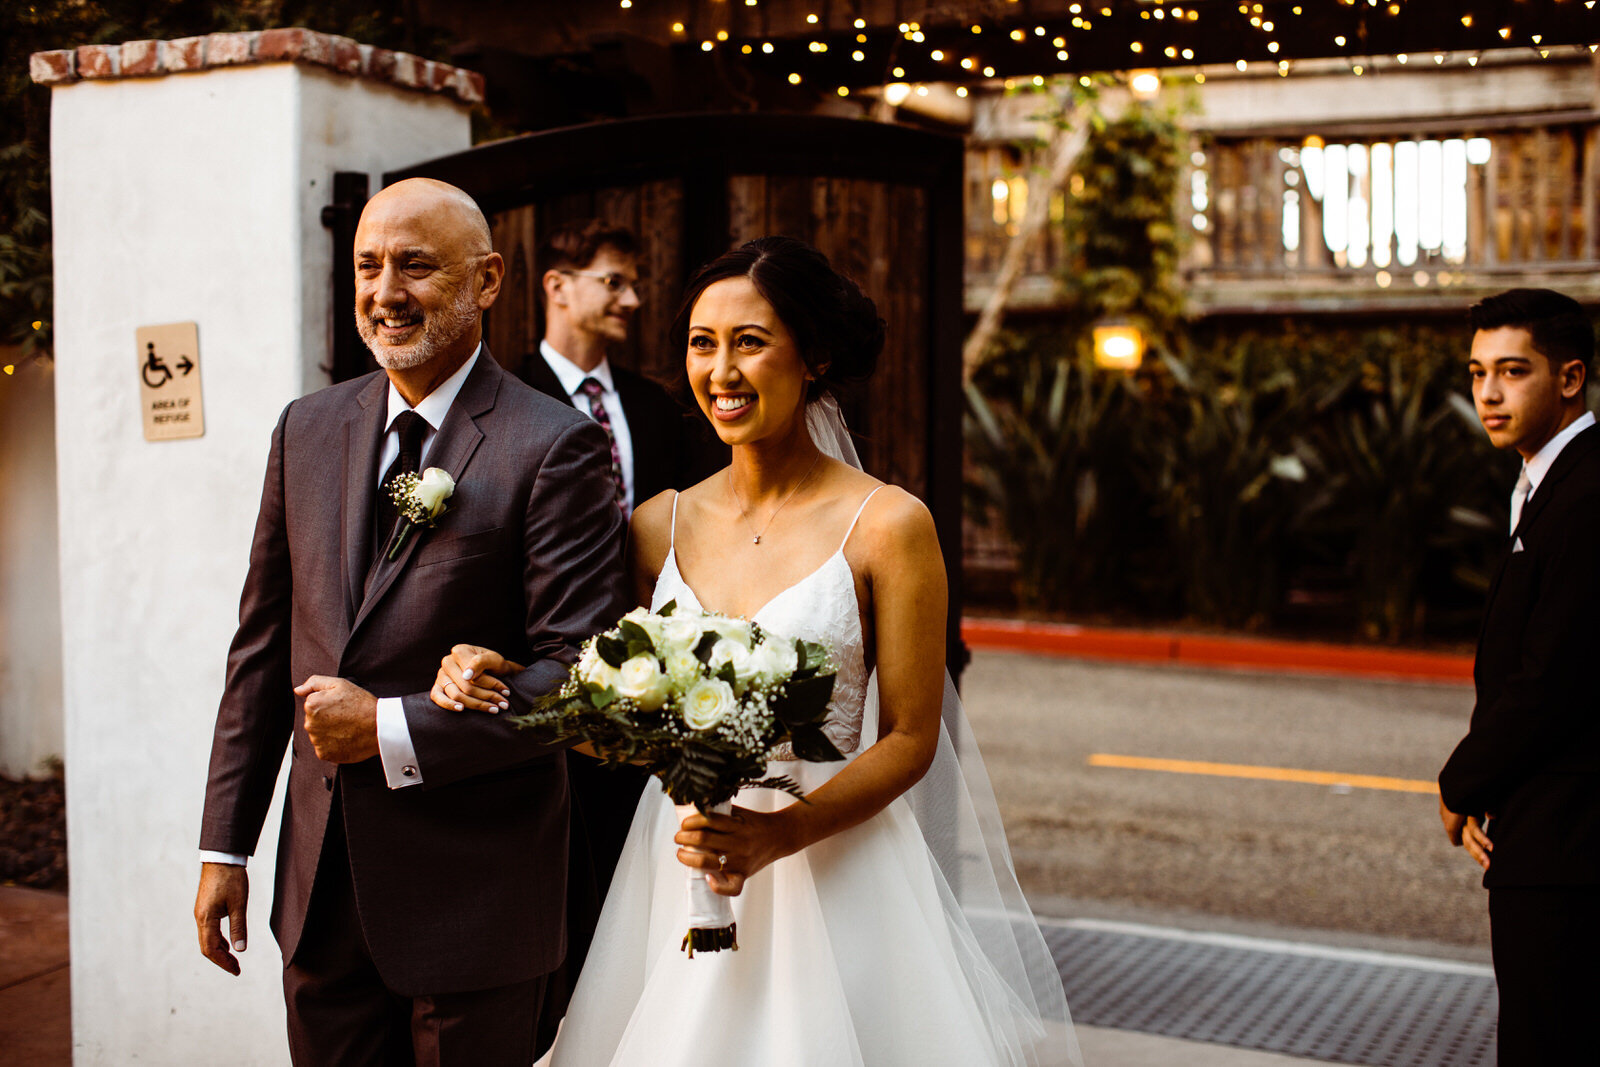 Bride and dad walk down aisle | Candid, warm wedding photography | Franciscan Gardens wedding in San Juan Capistrano, CA by Kept Record www.keptrecord.com